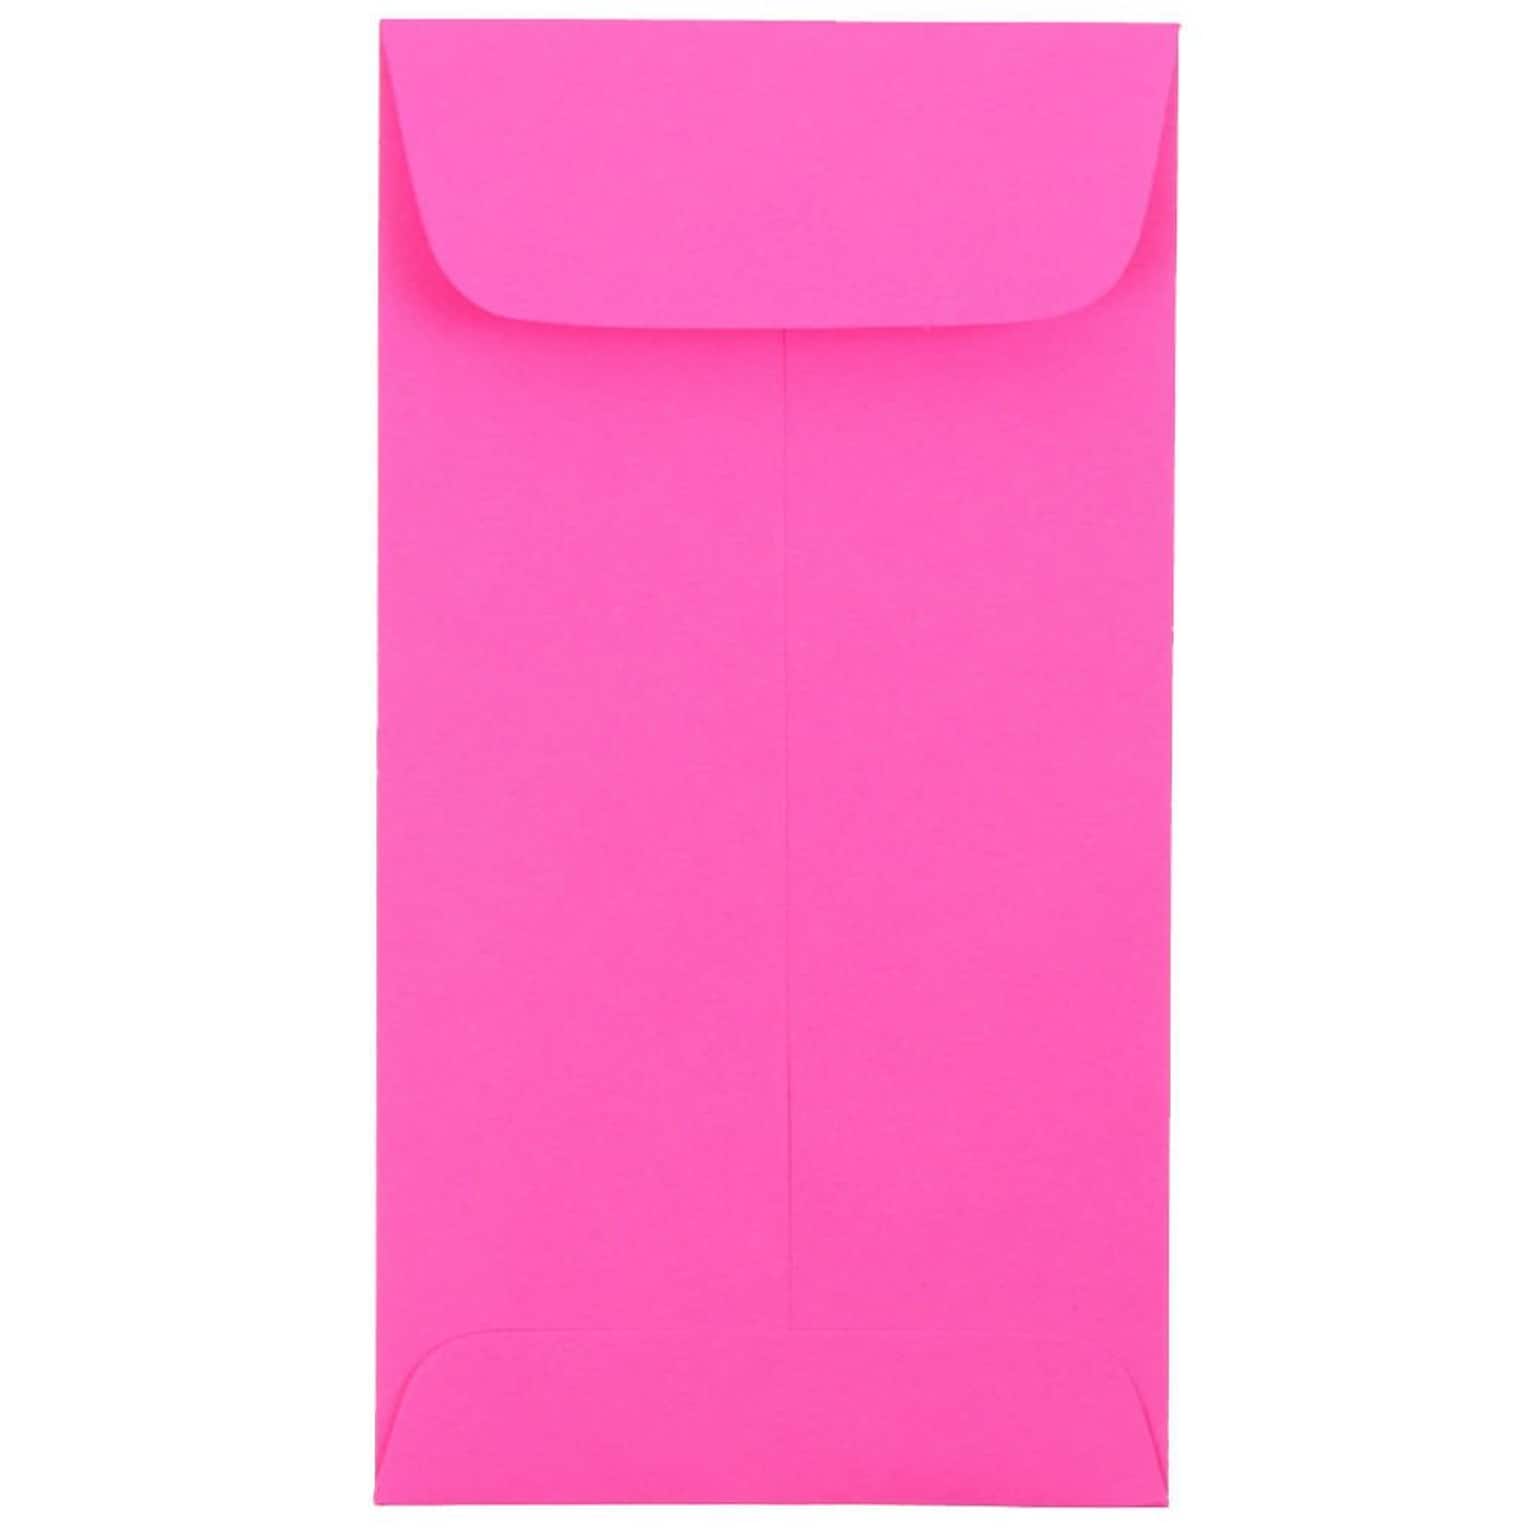 JAM Paper #7 Coin Business Colored Envelopes, 3.5 x 6.5, Ultra Fuchsia Pink, Bulk 500/Box (1526767H)